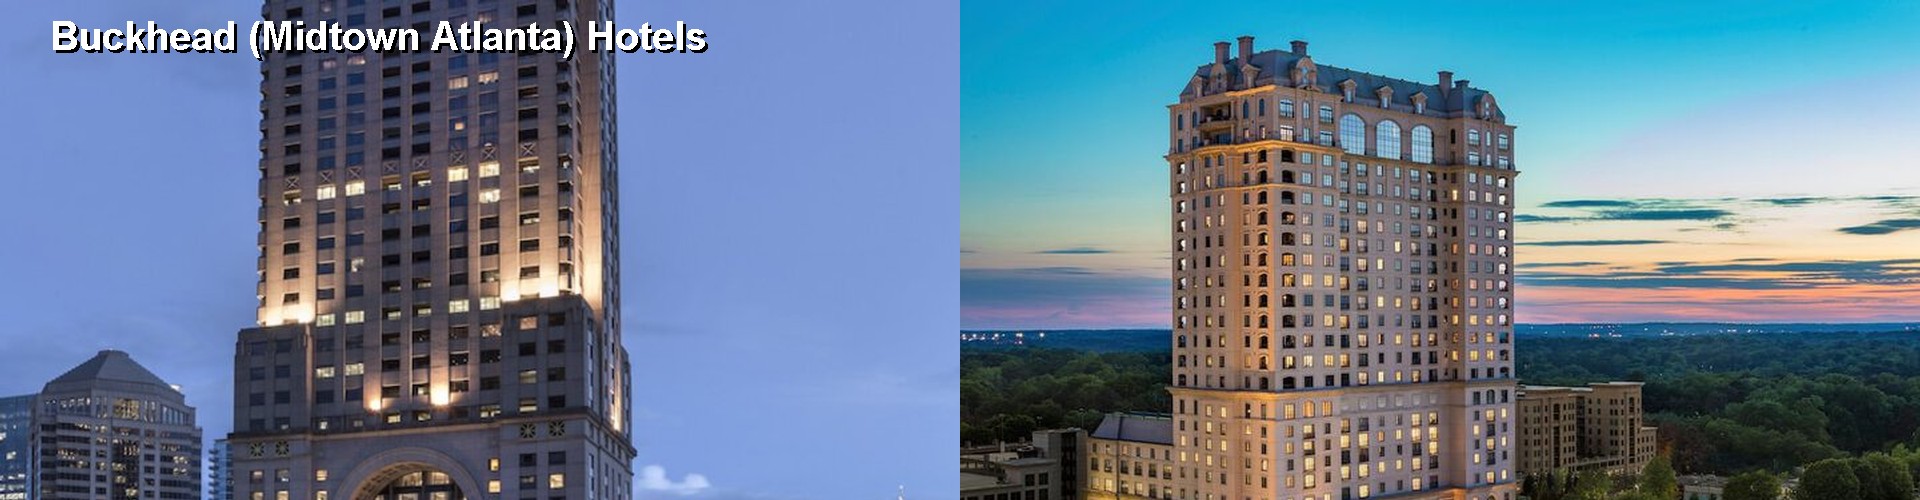 5 Best Hotels near Buckhead (Midtown Atlanta)